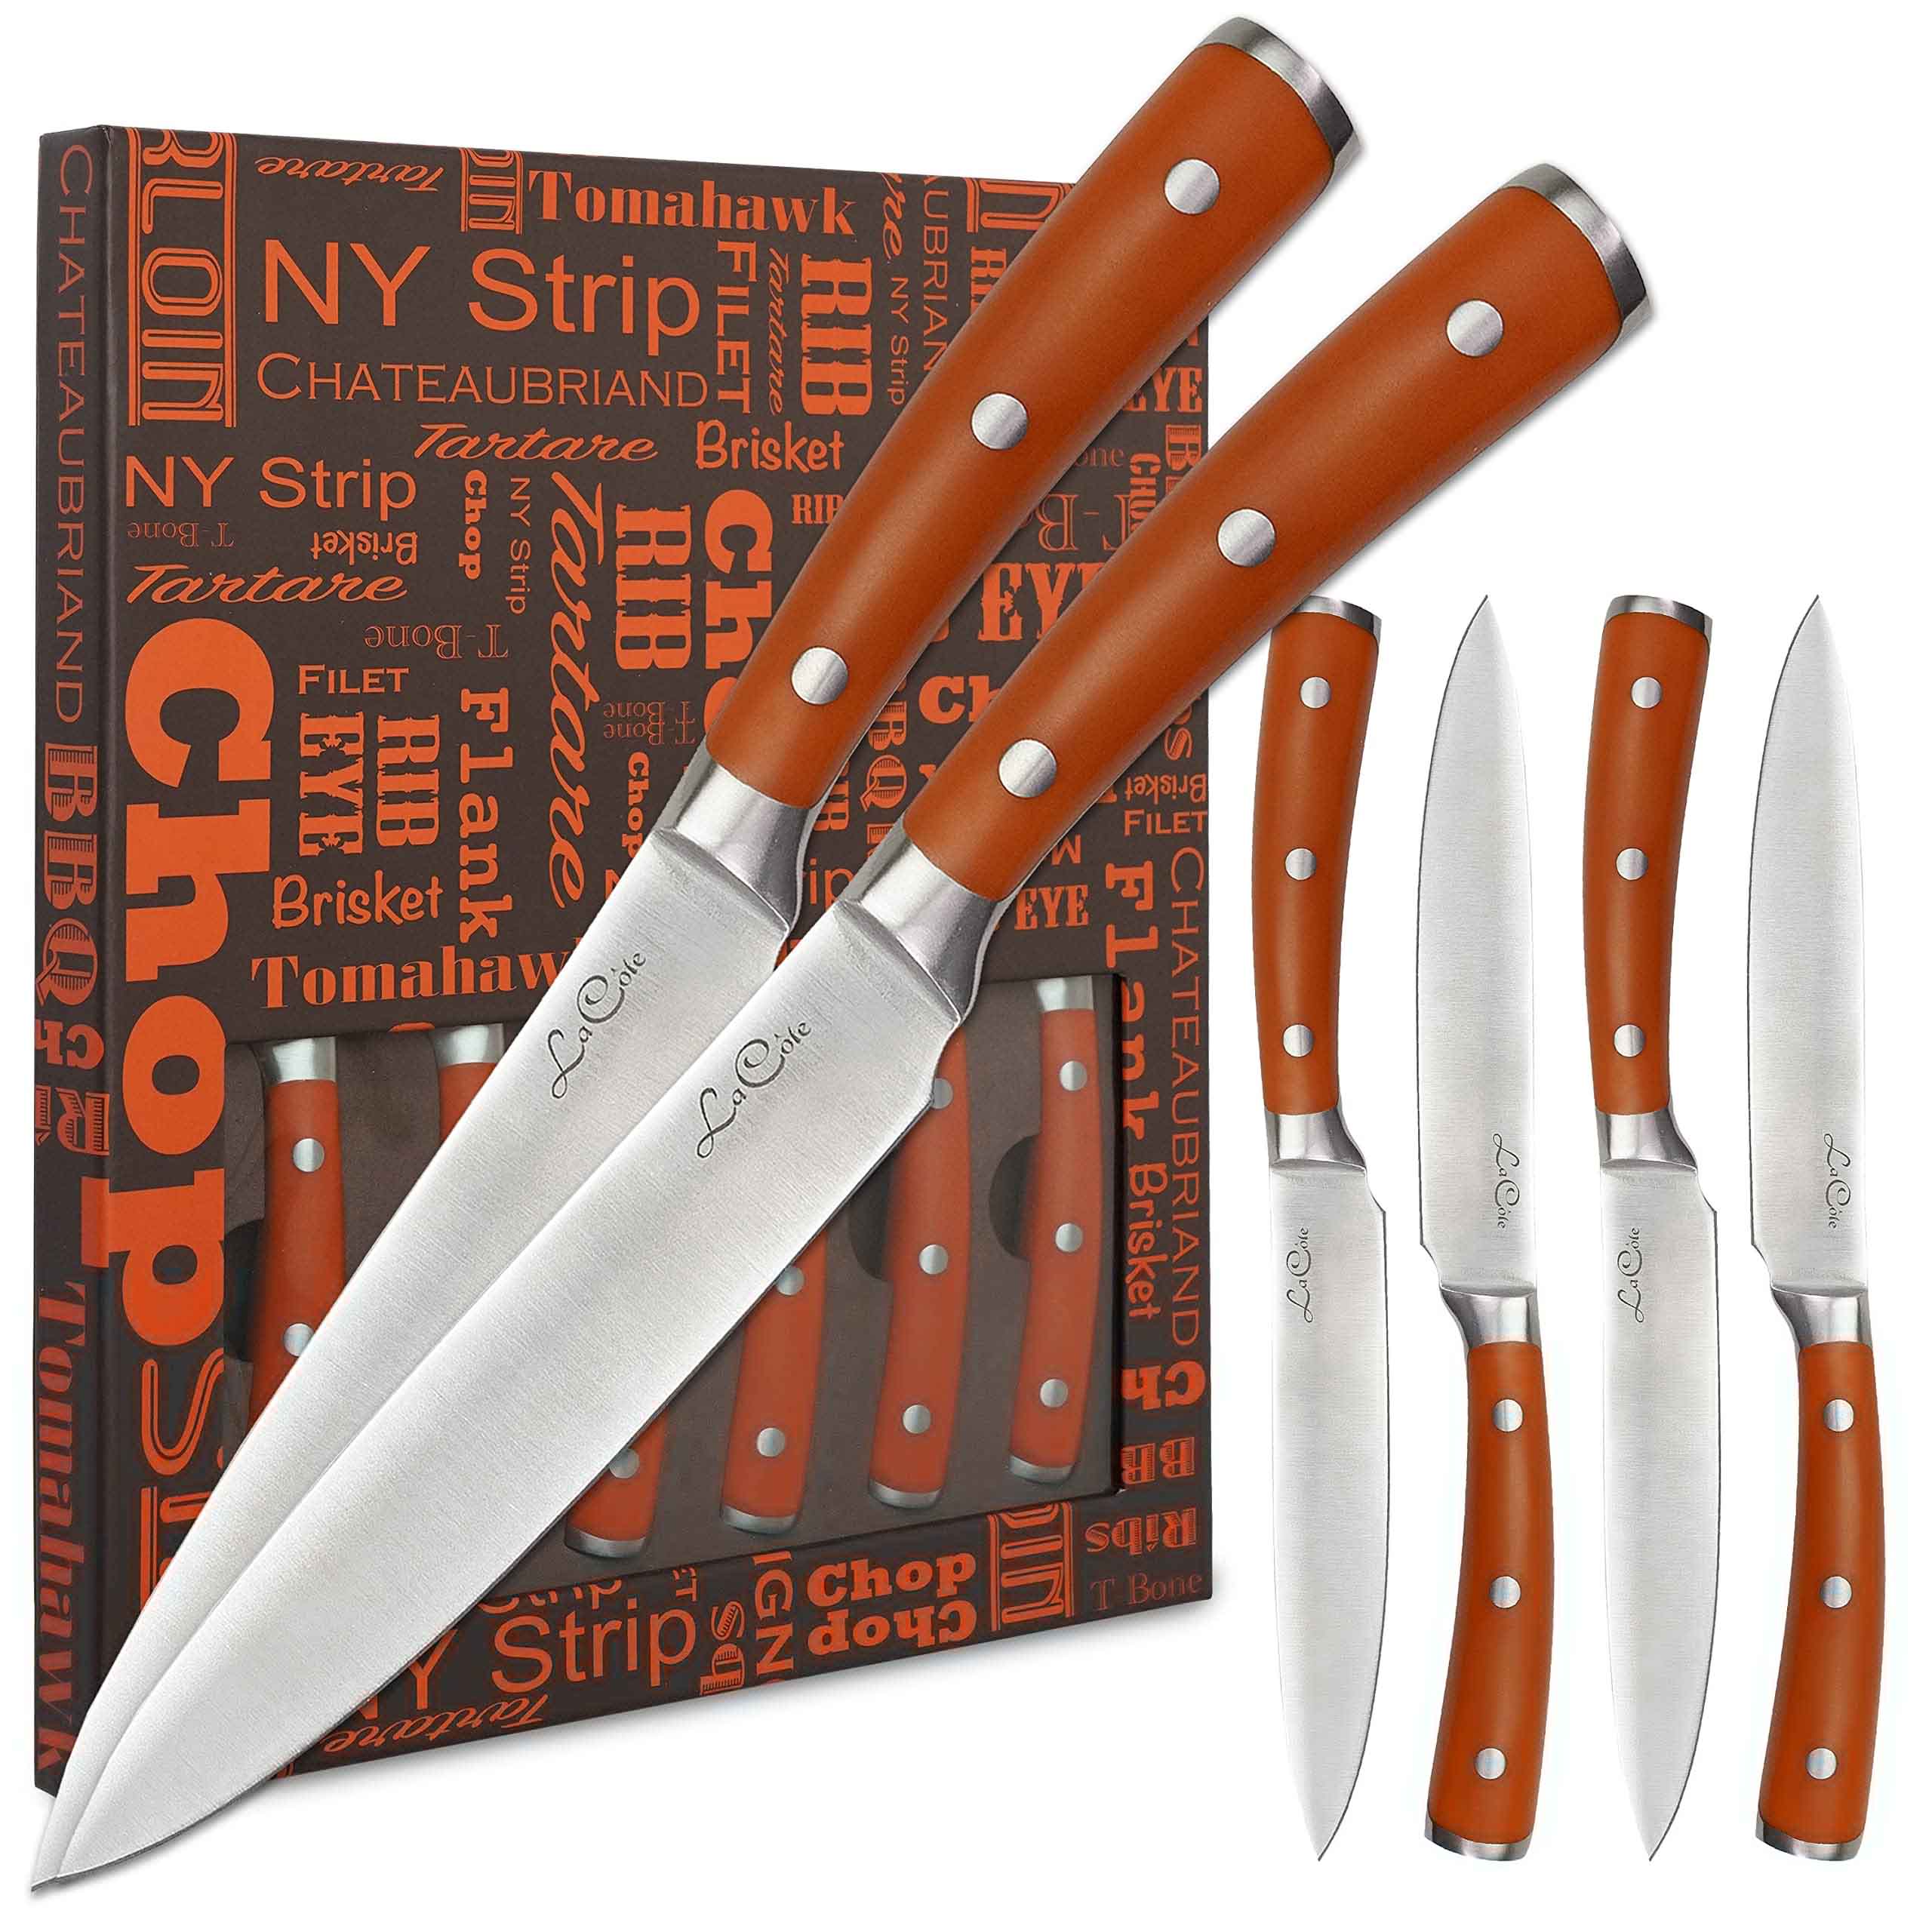 La Cote 6 Piece Maple Steak Knives Set Japanese Steel straight edge blades in Gift Box